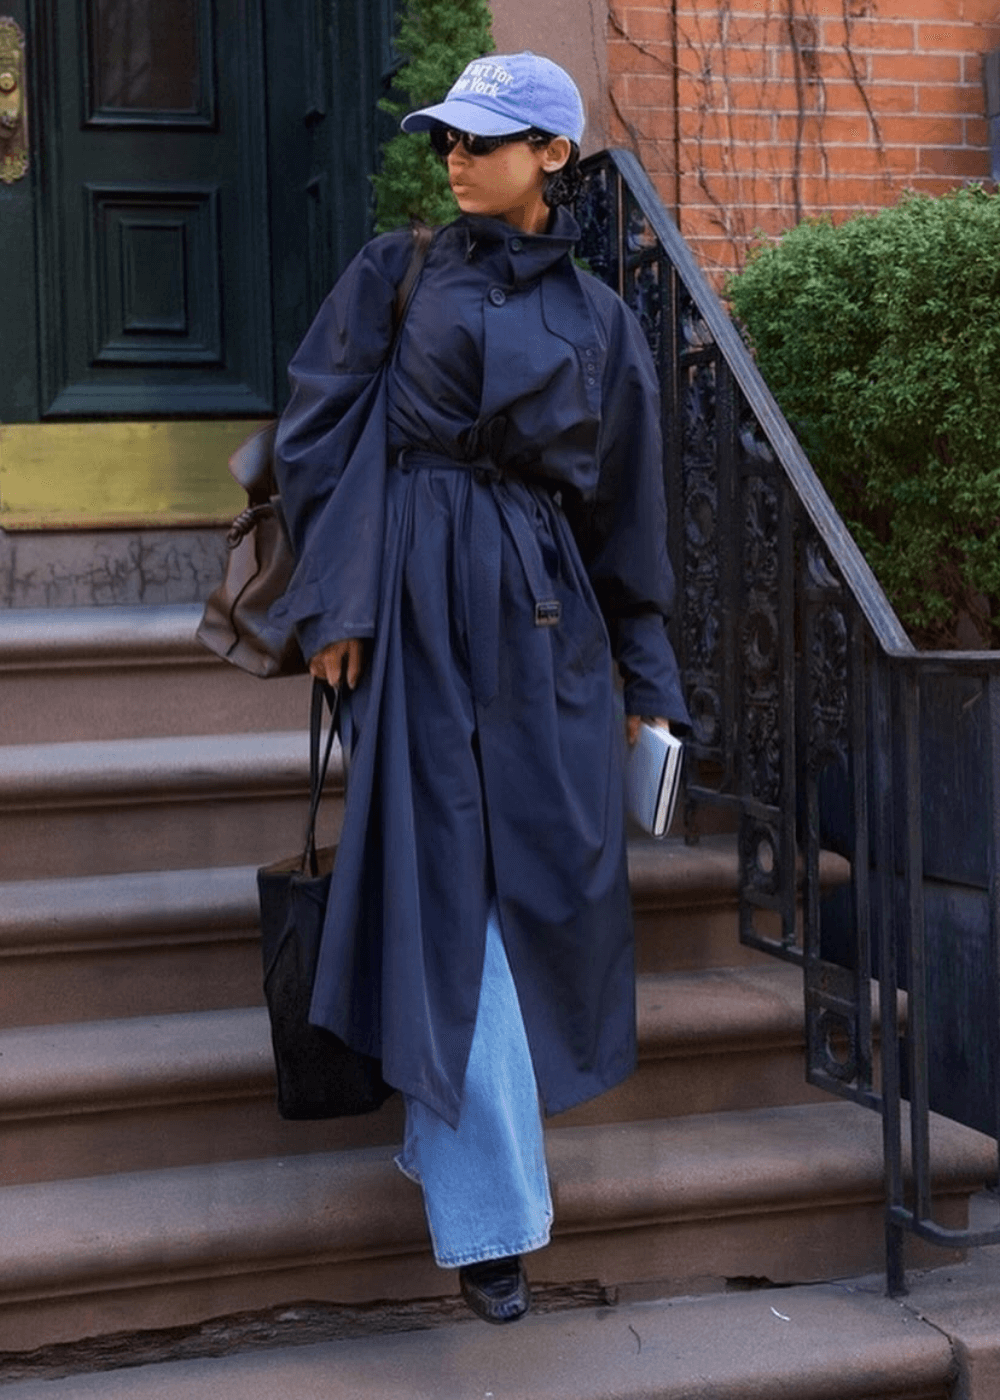 Taylor Russell - calça jeans, casaco trench coat azul e boné - Taylor Russell - inverno - mulher de óculos em pé na rua - https://stealthelook.com.br